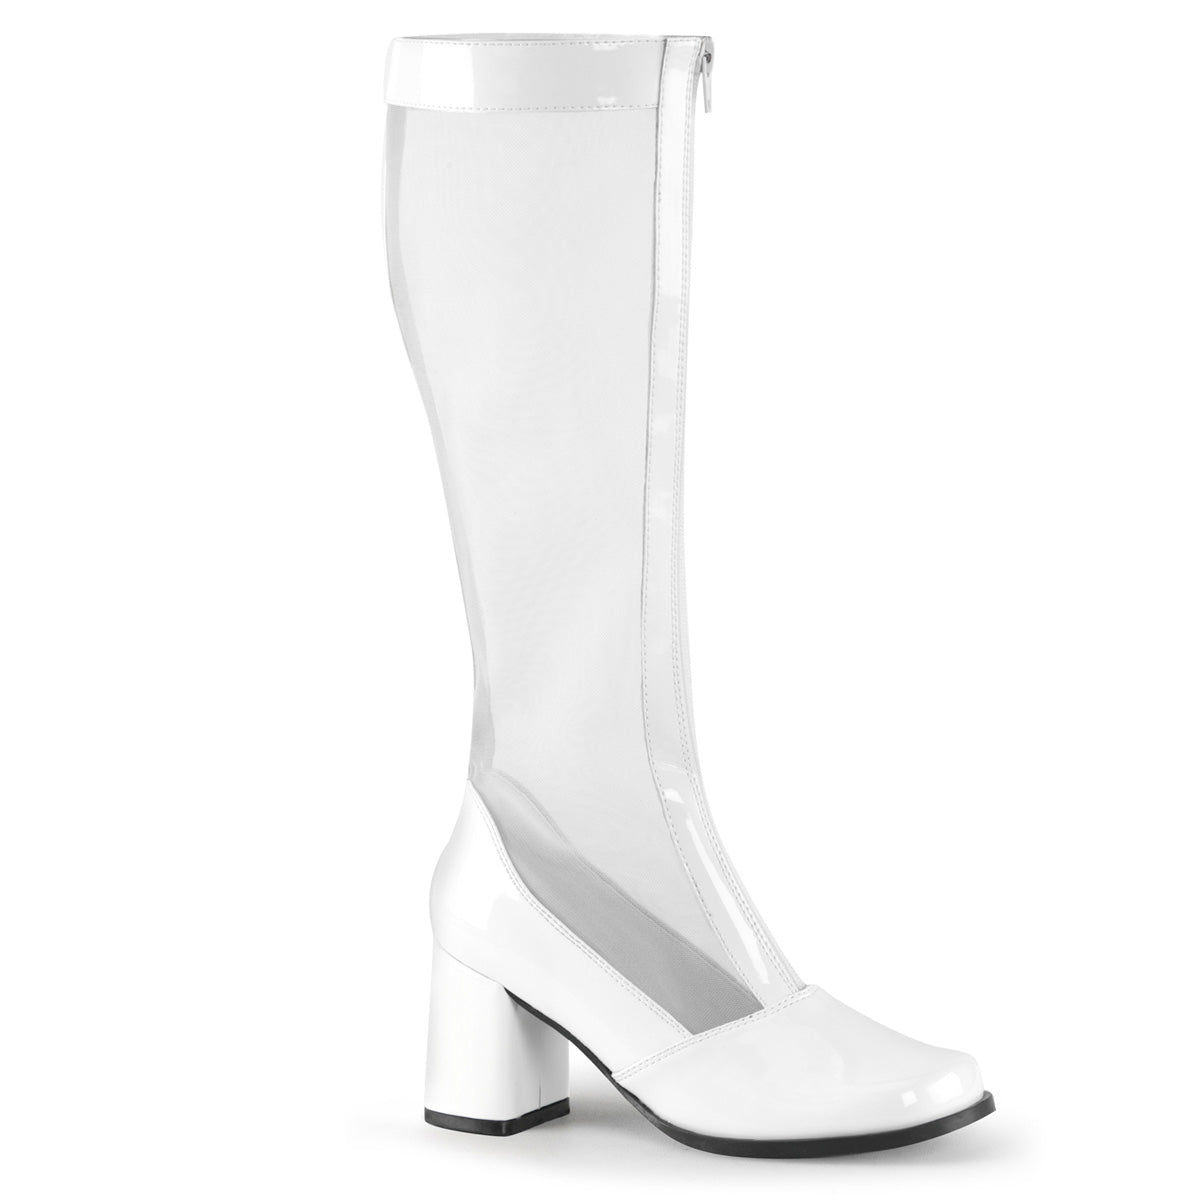 GOGO-307 FUNTASMA 3 inch hak witte octrooi vrouwen laarzen